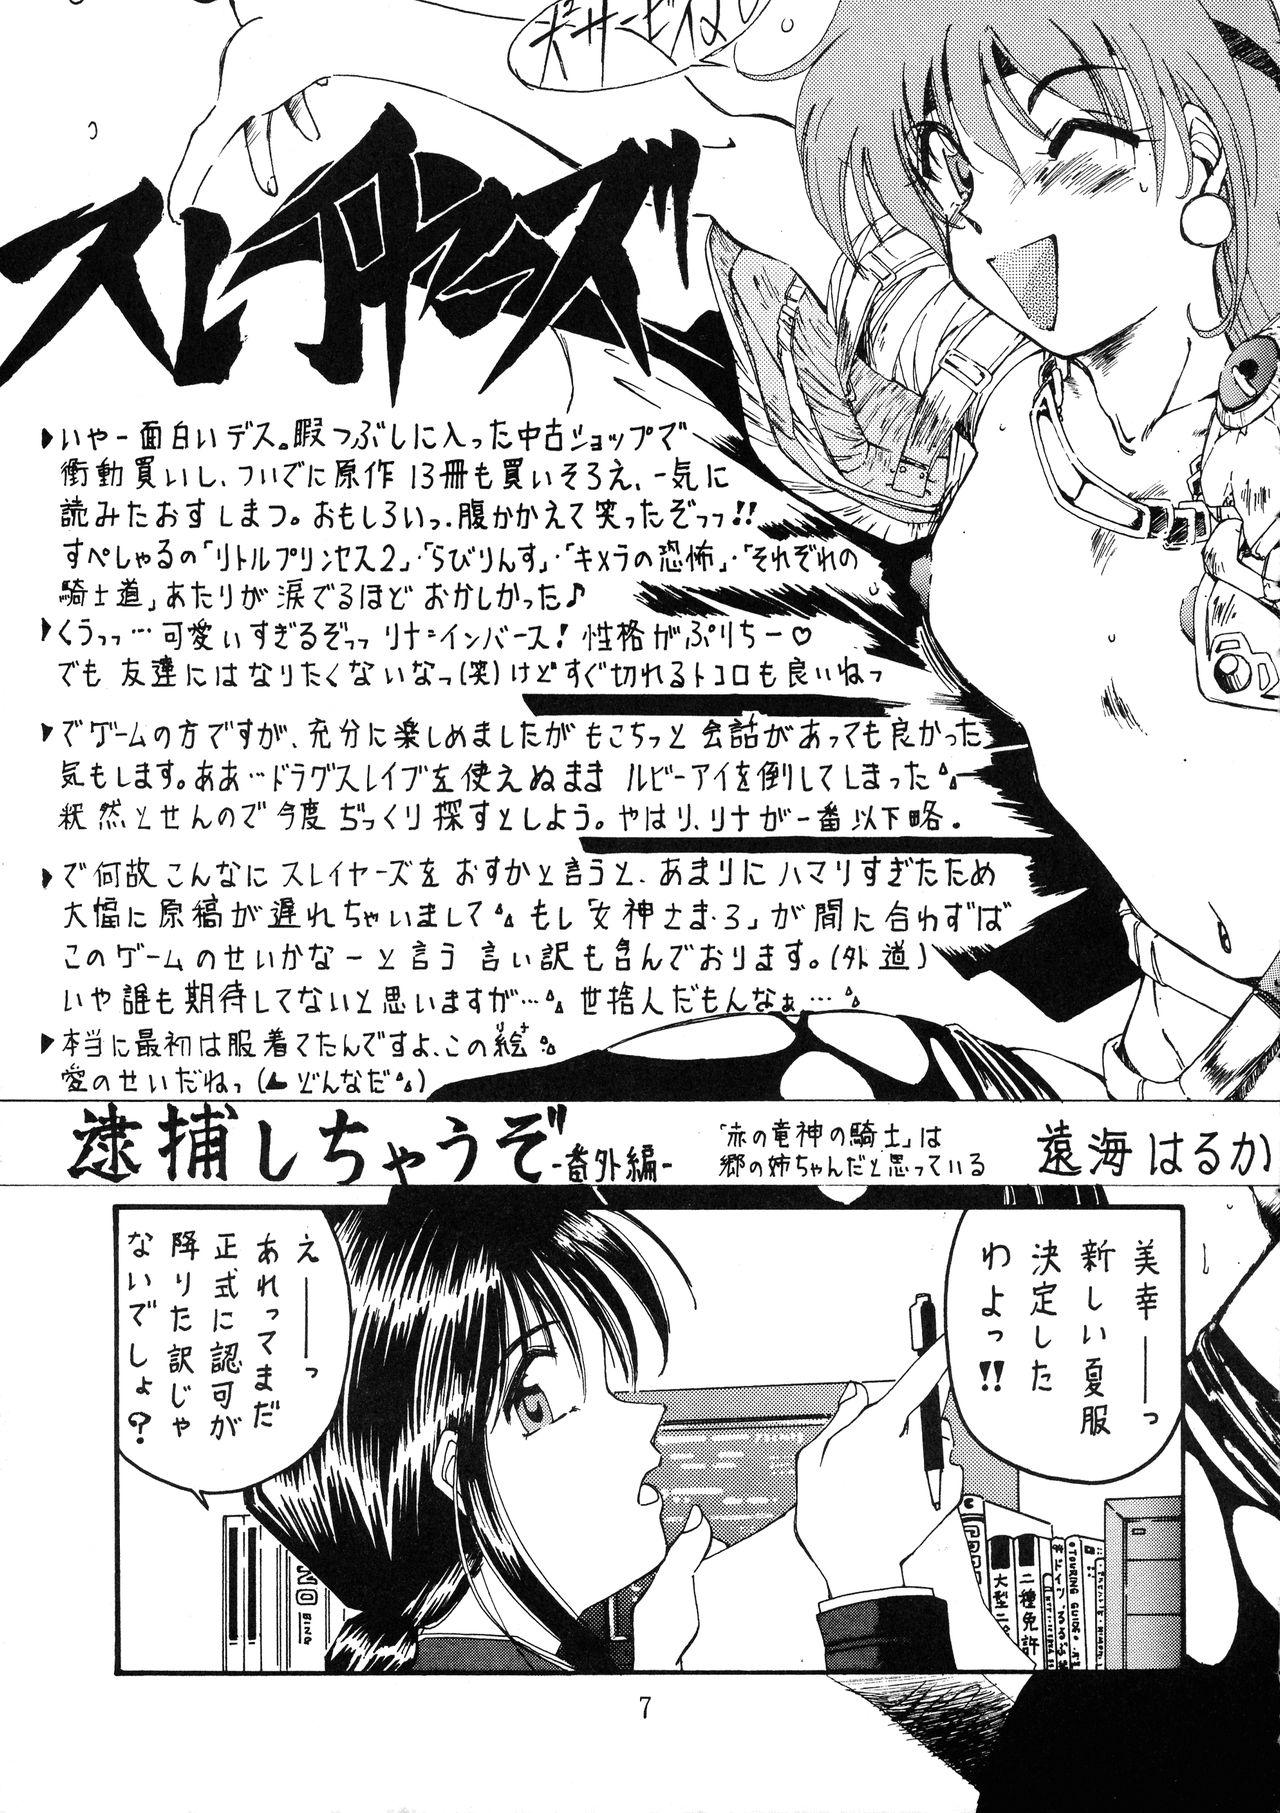 Cdmx Goku tamashi Young - Page 7